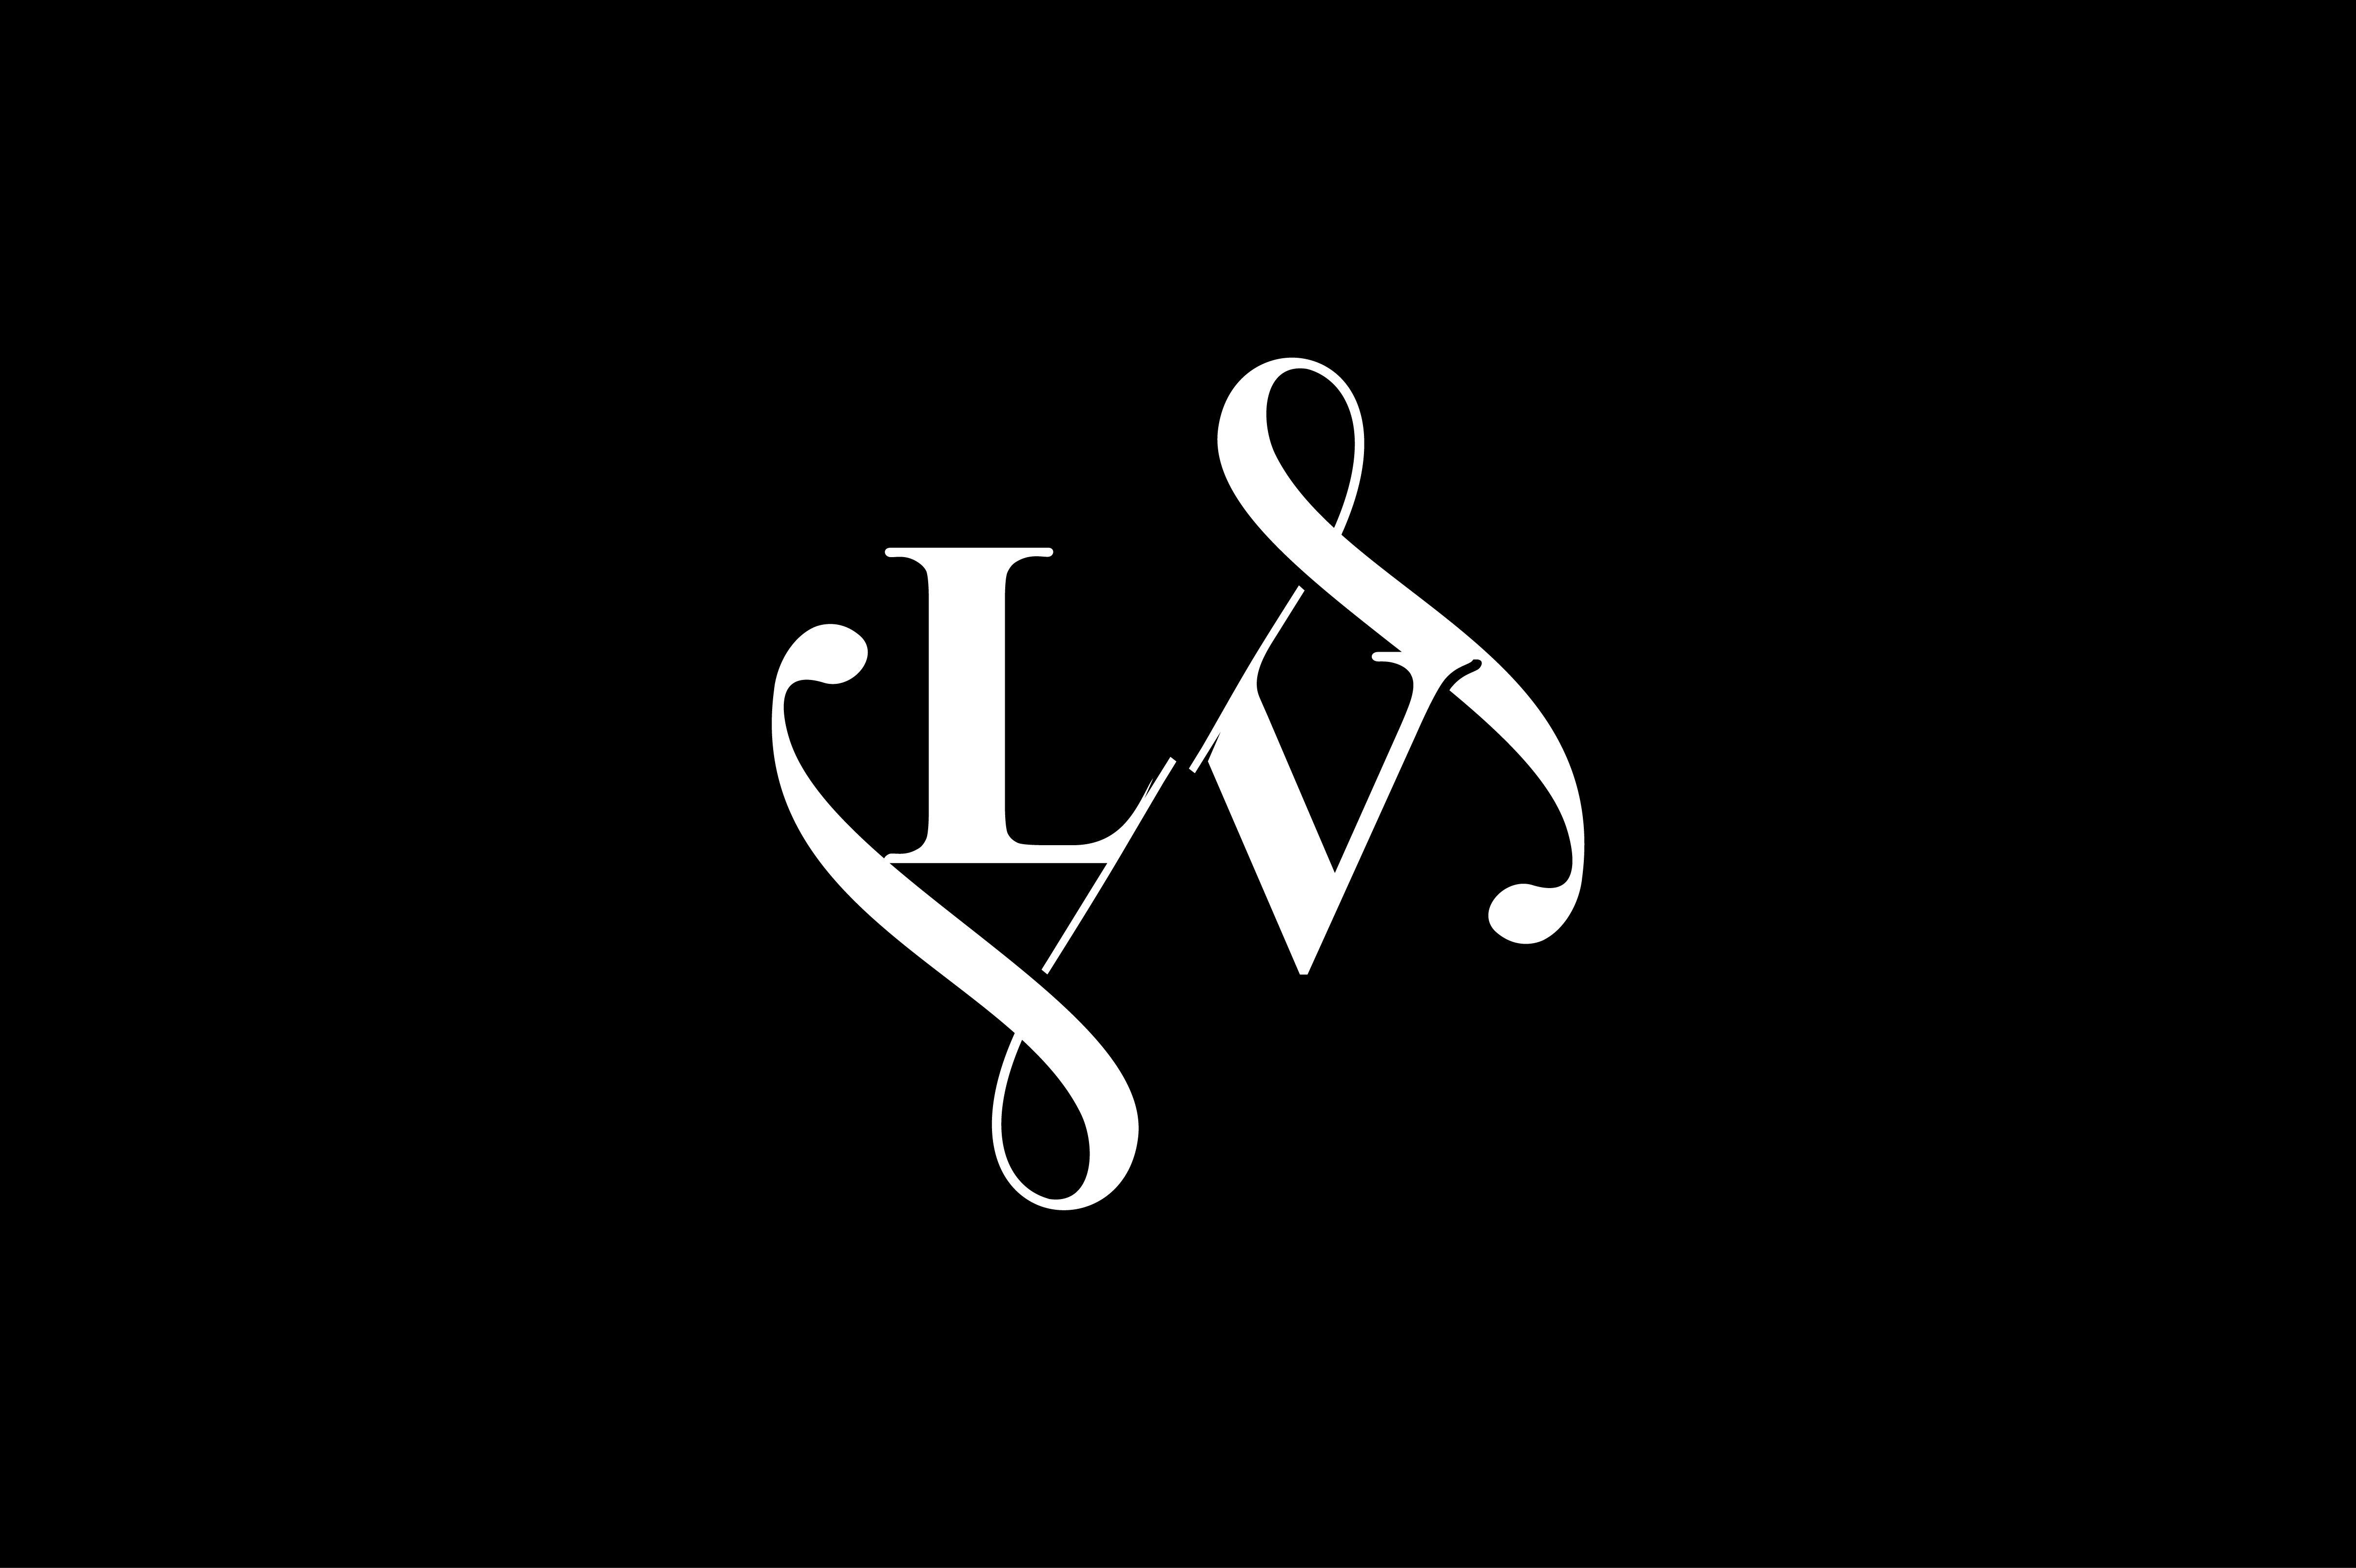 LV Monogram logo Design V6 By Vectorseller